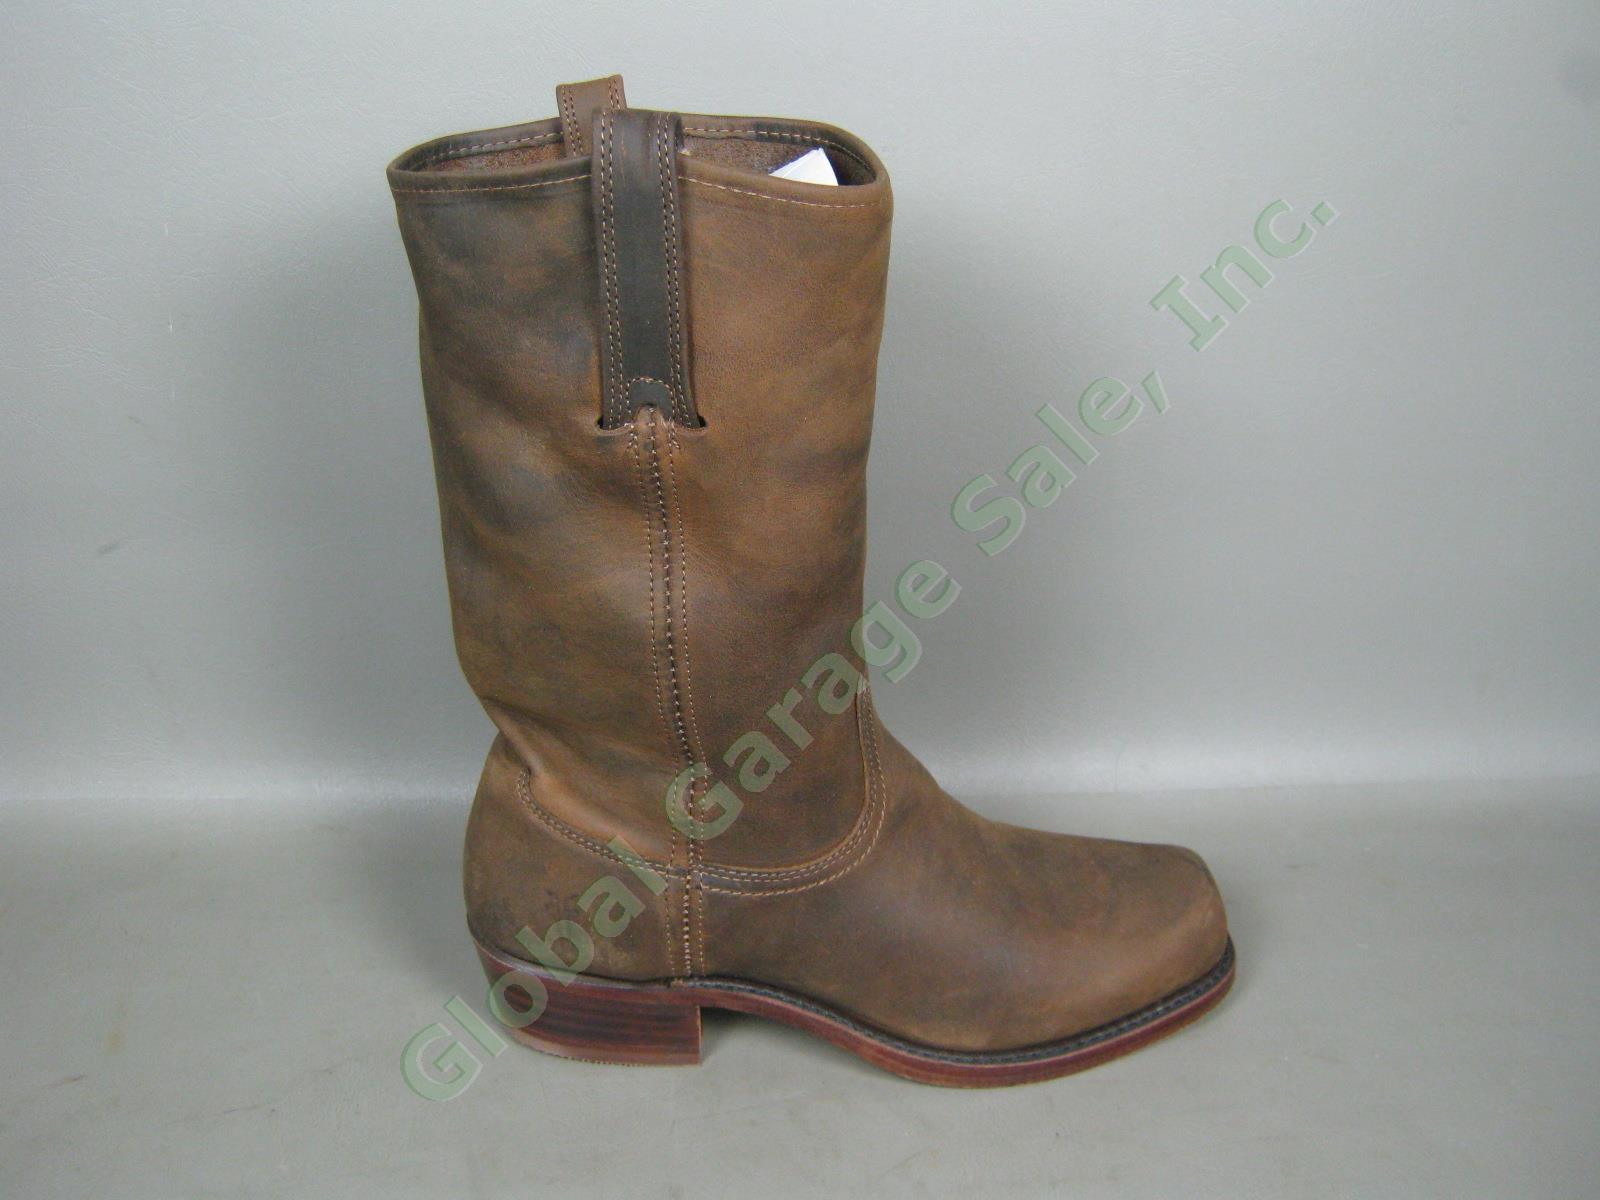 Mens Frye Cavalry 12L Tan Leather Boots Worn Once 9.5 Medium Width W/Box 87410-1 4